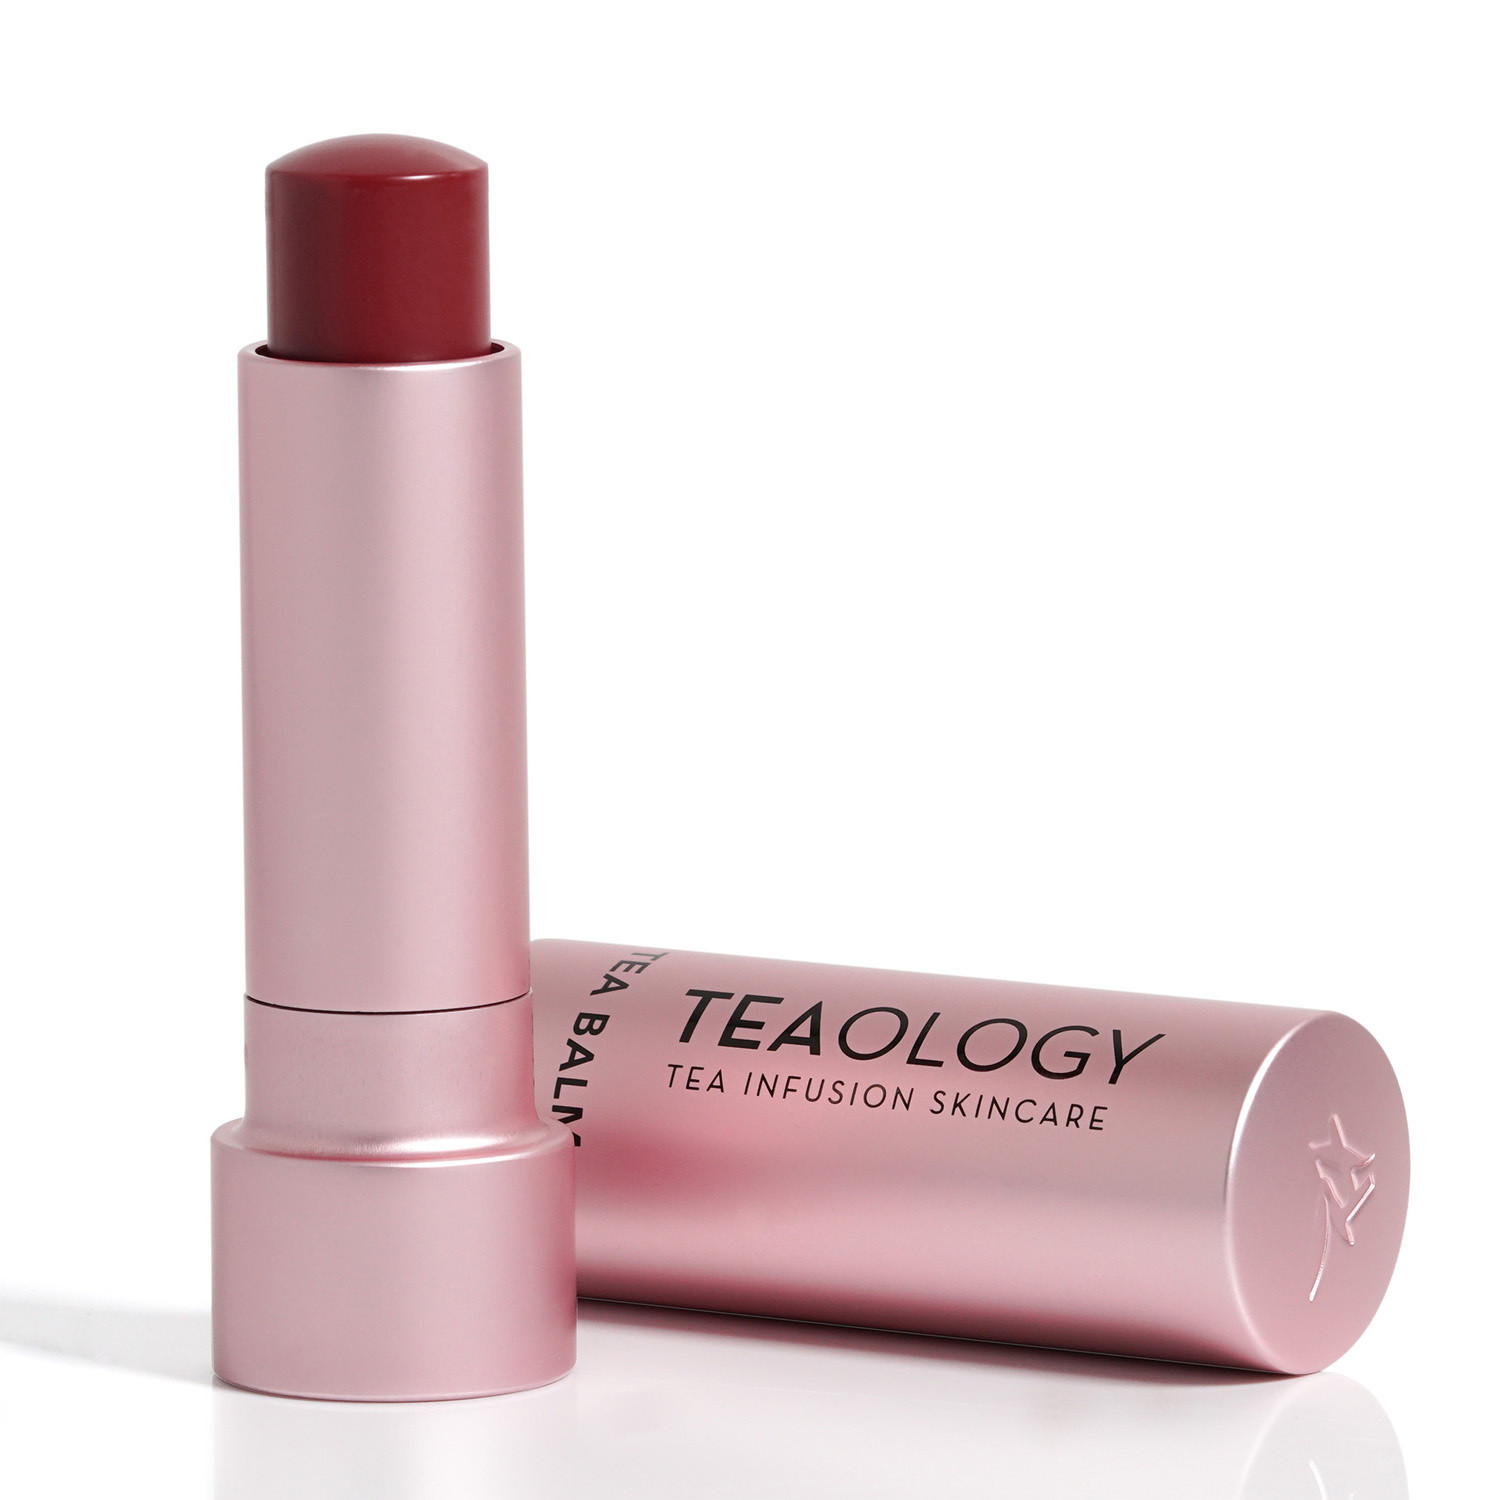 Tea Balm Tinted Lip Treatment | Berry Tea, Rosso, large